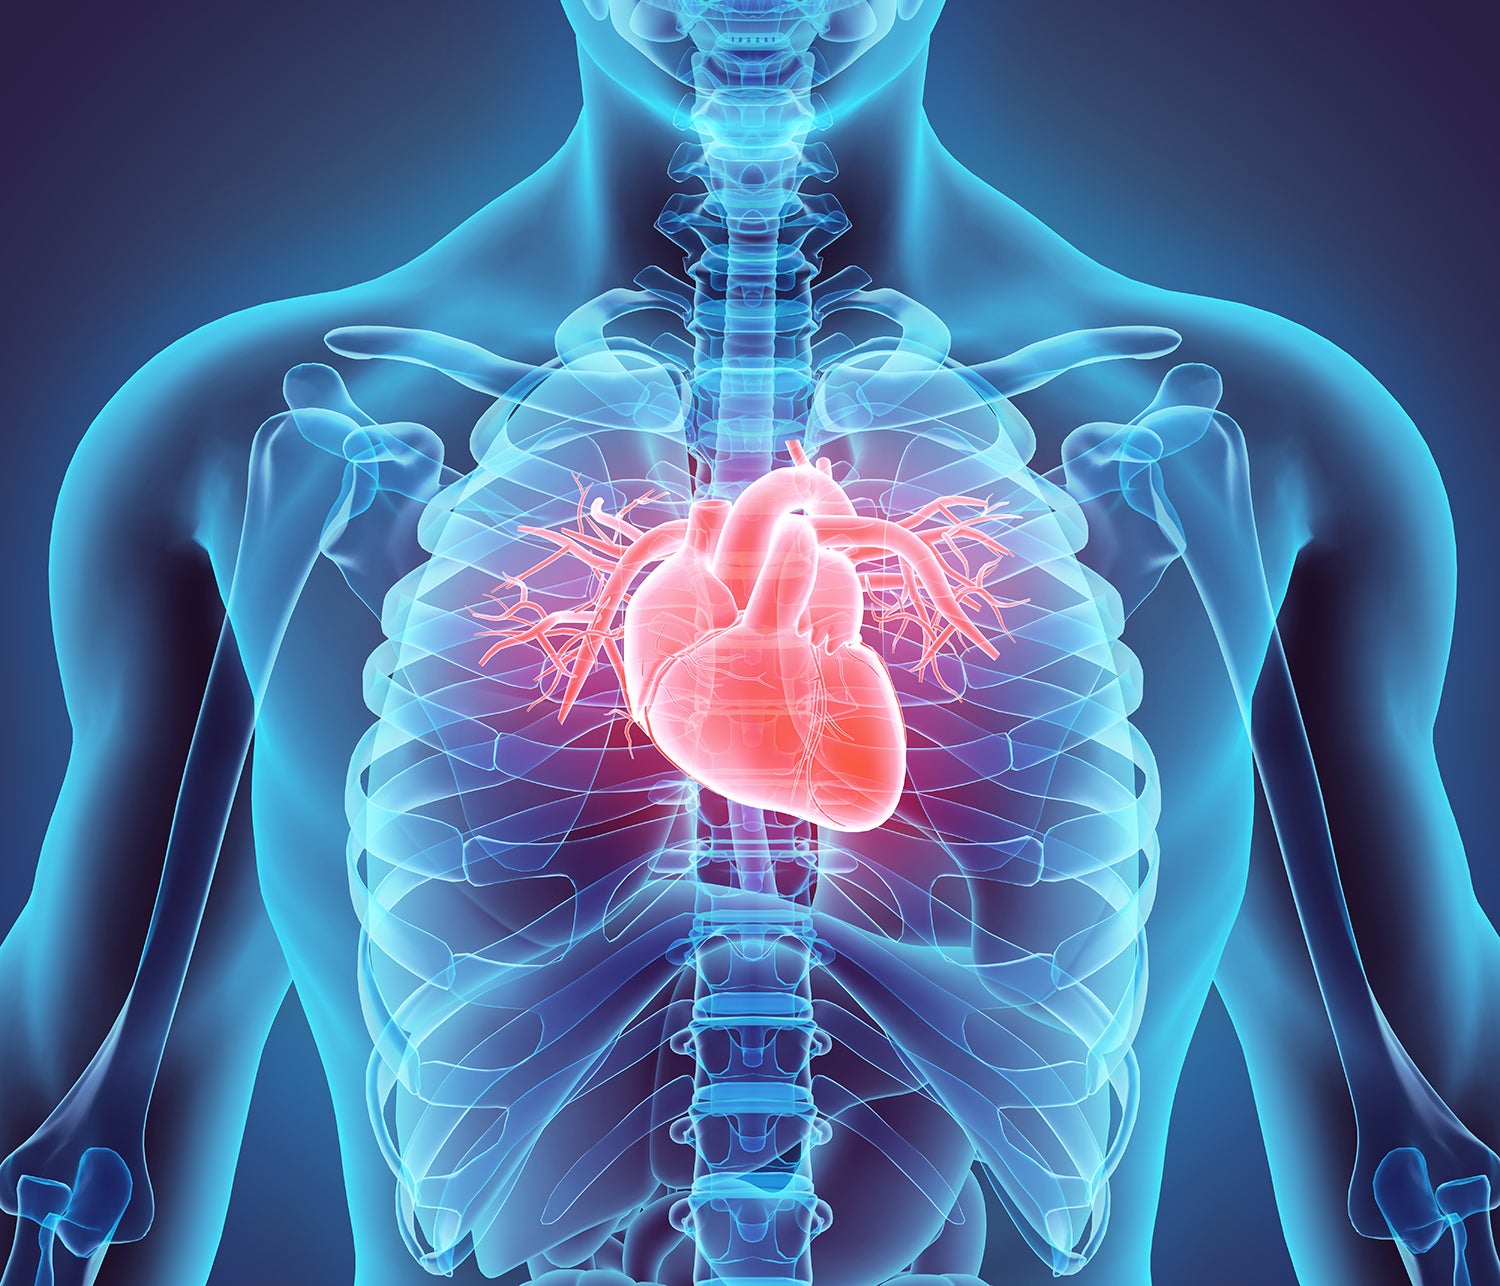 Ultrasound Evaluation of Heart Failure